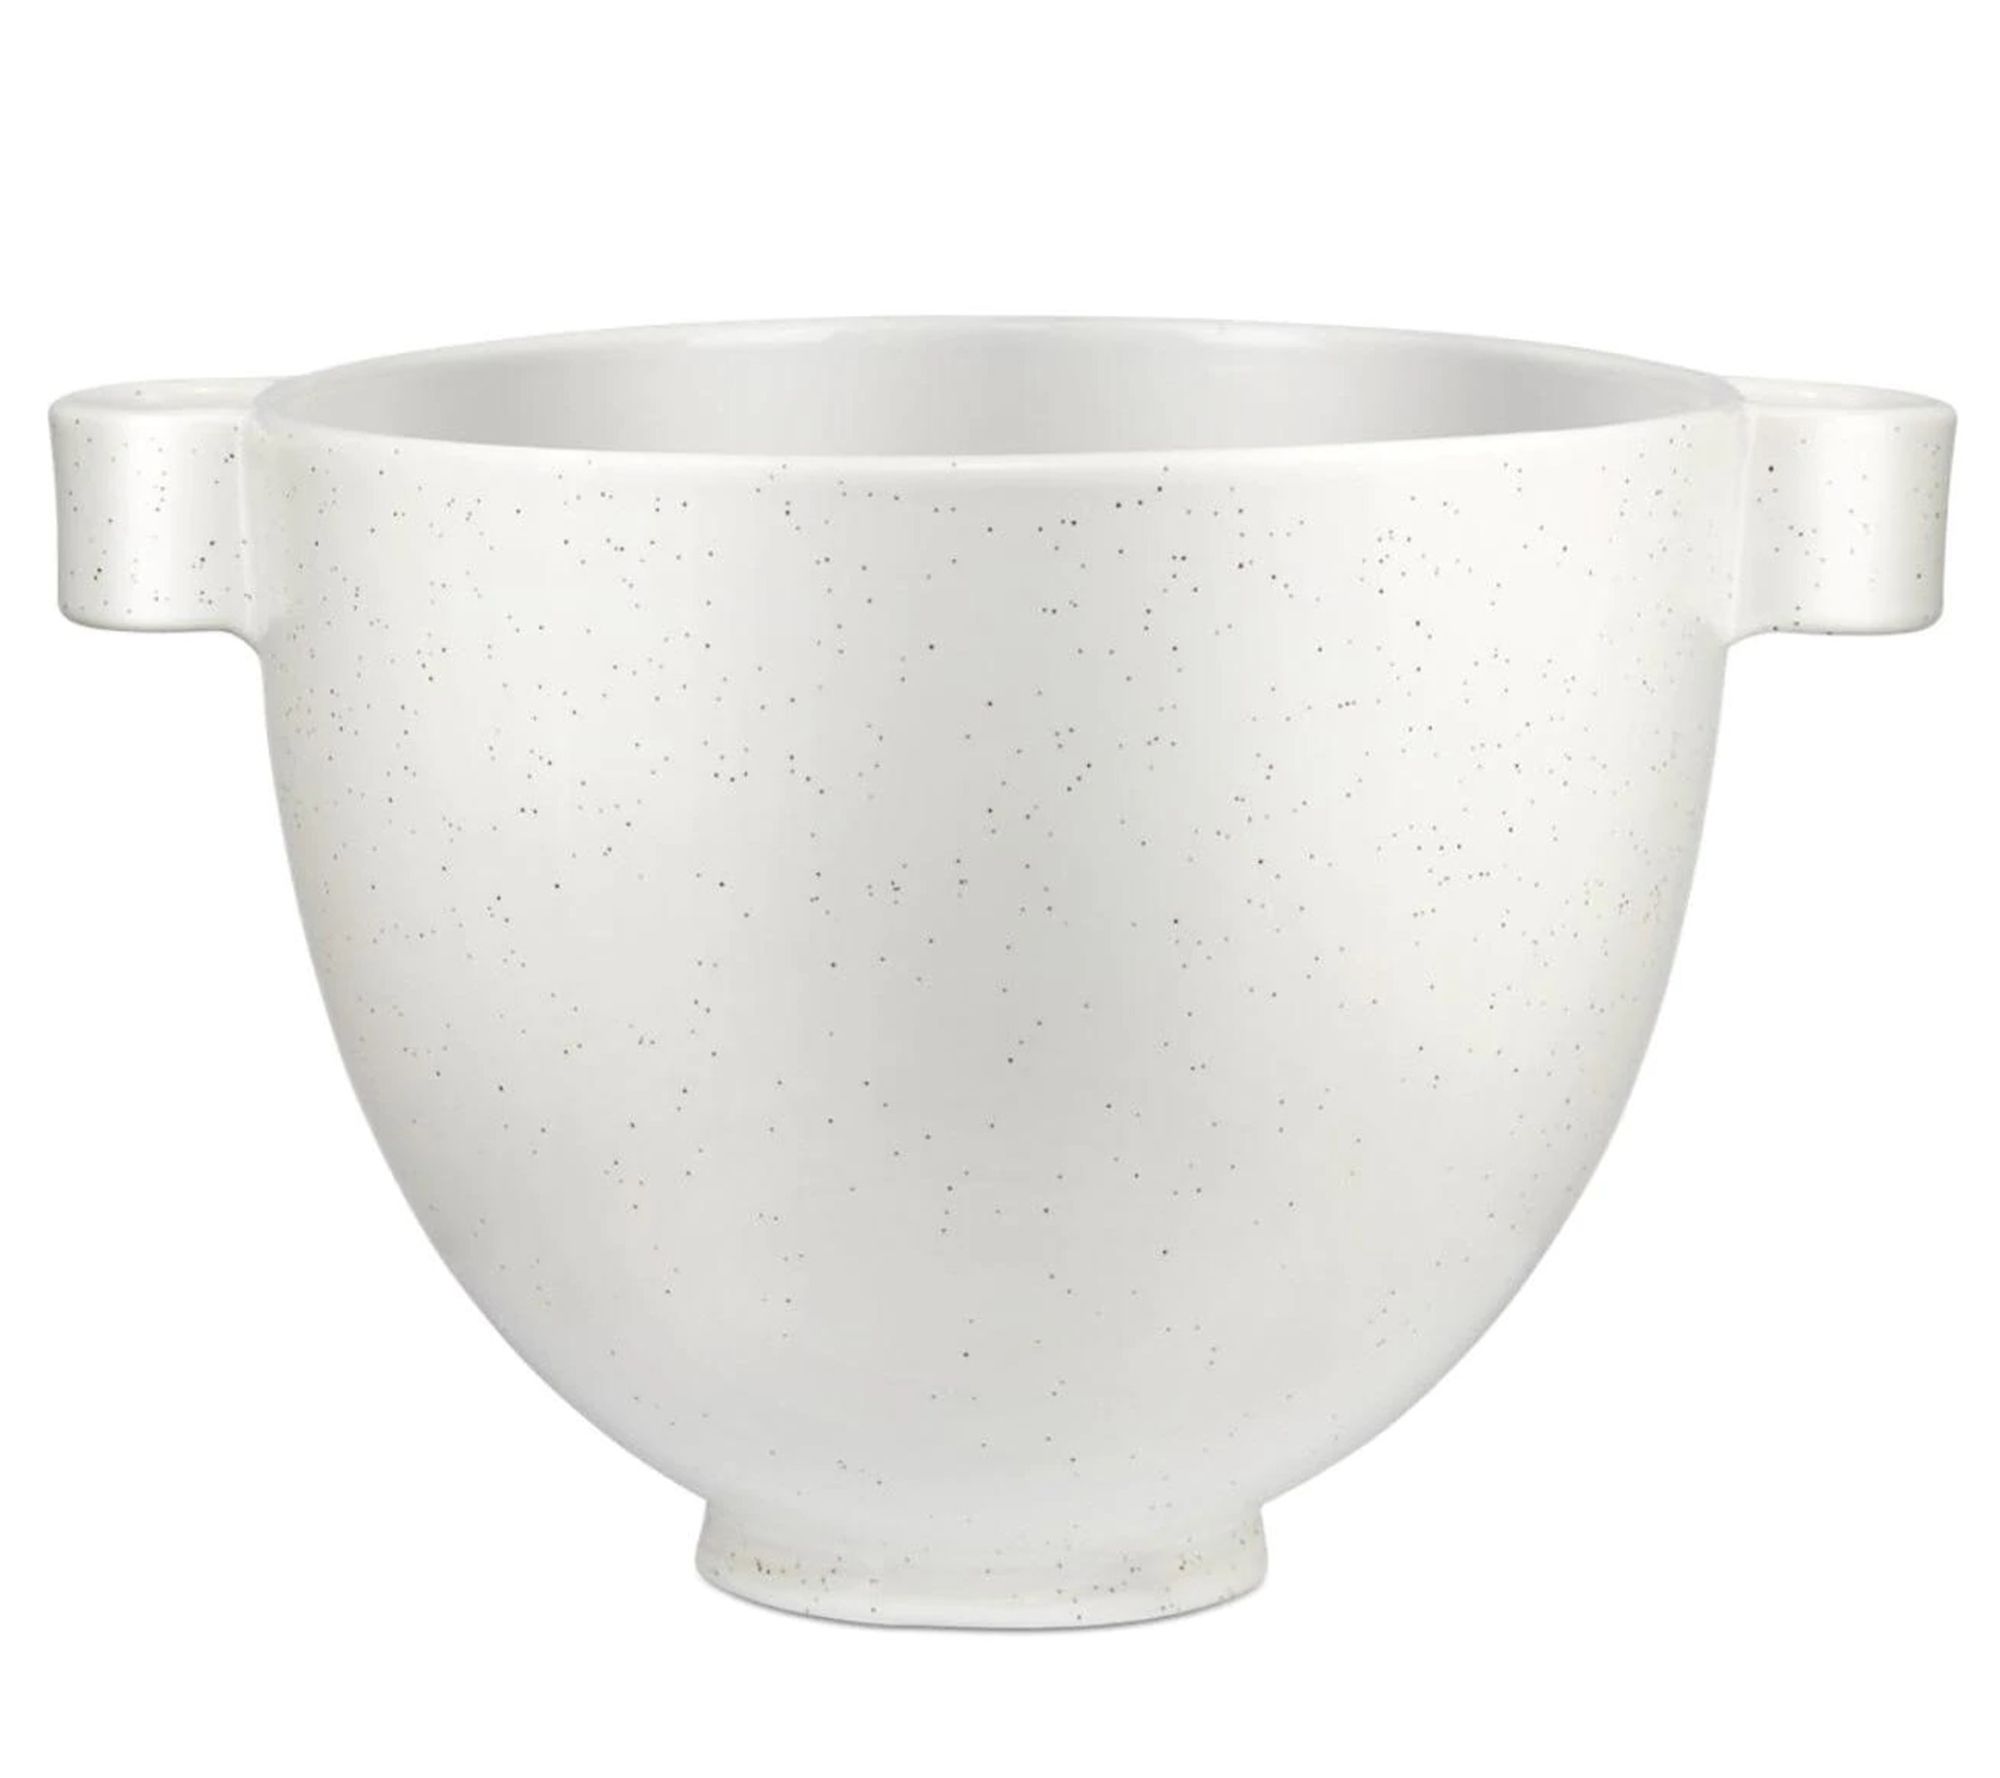 tilbage Vil aflivning KitchenAid 5-Quart Speckled Stone Ceramic Bowl - QVC.com